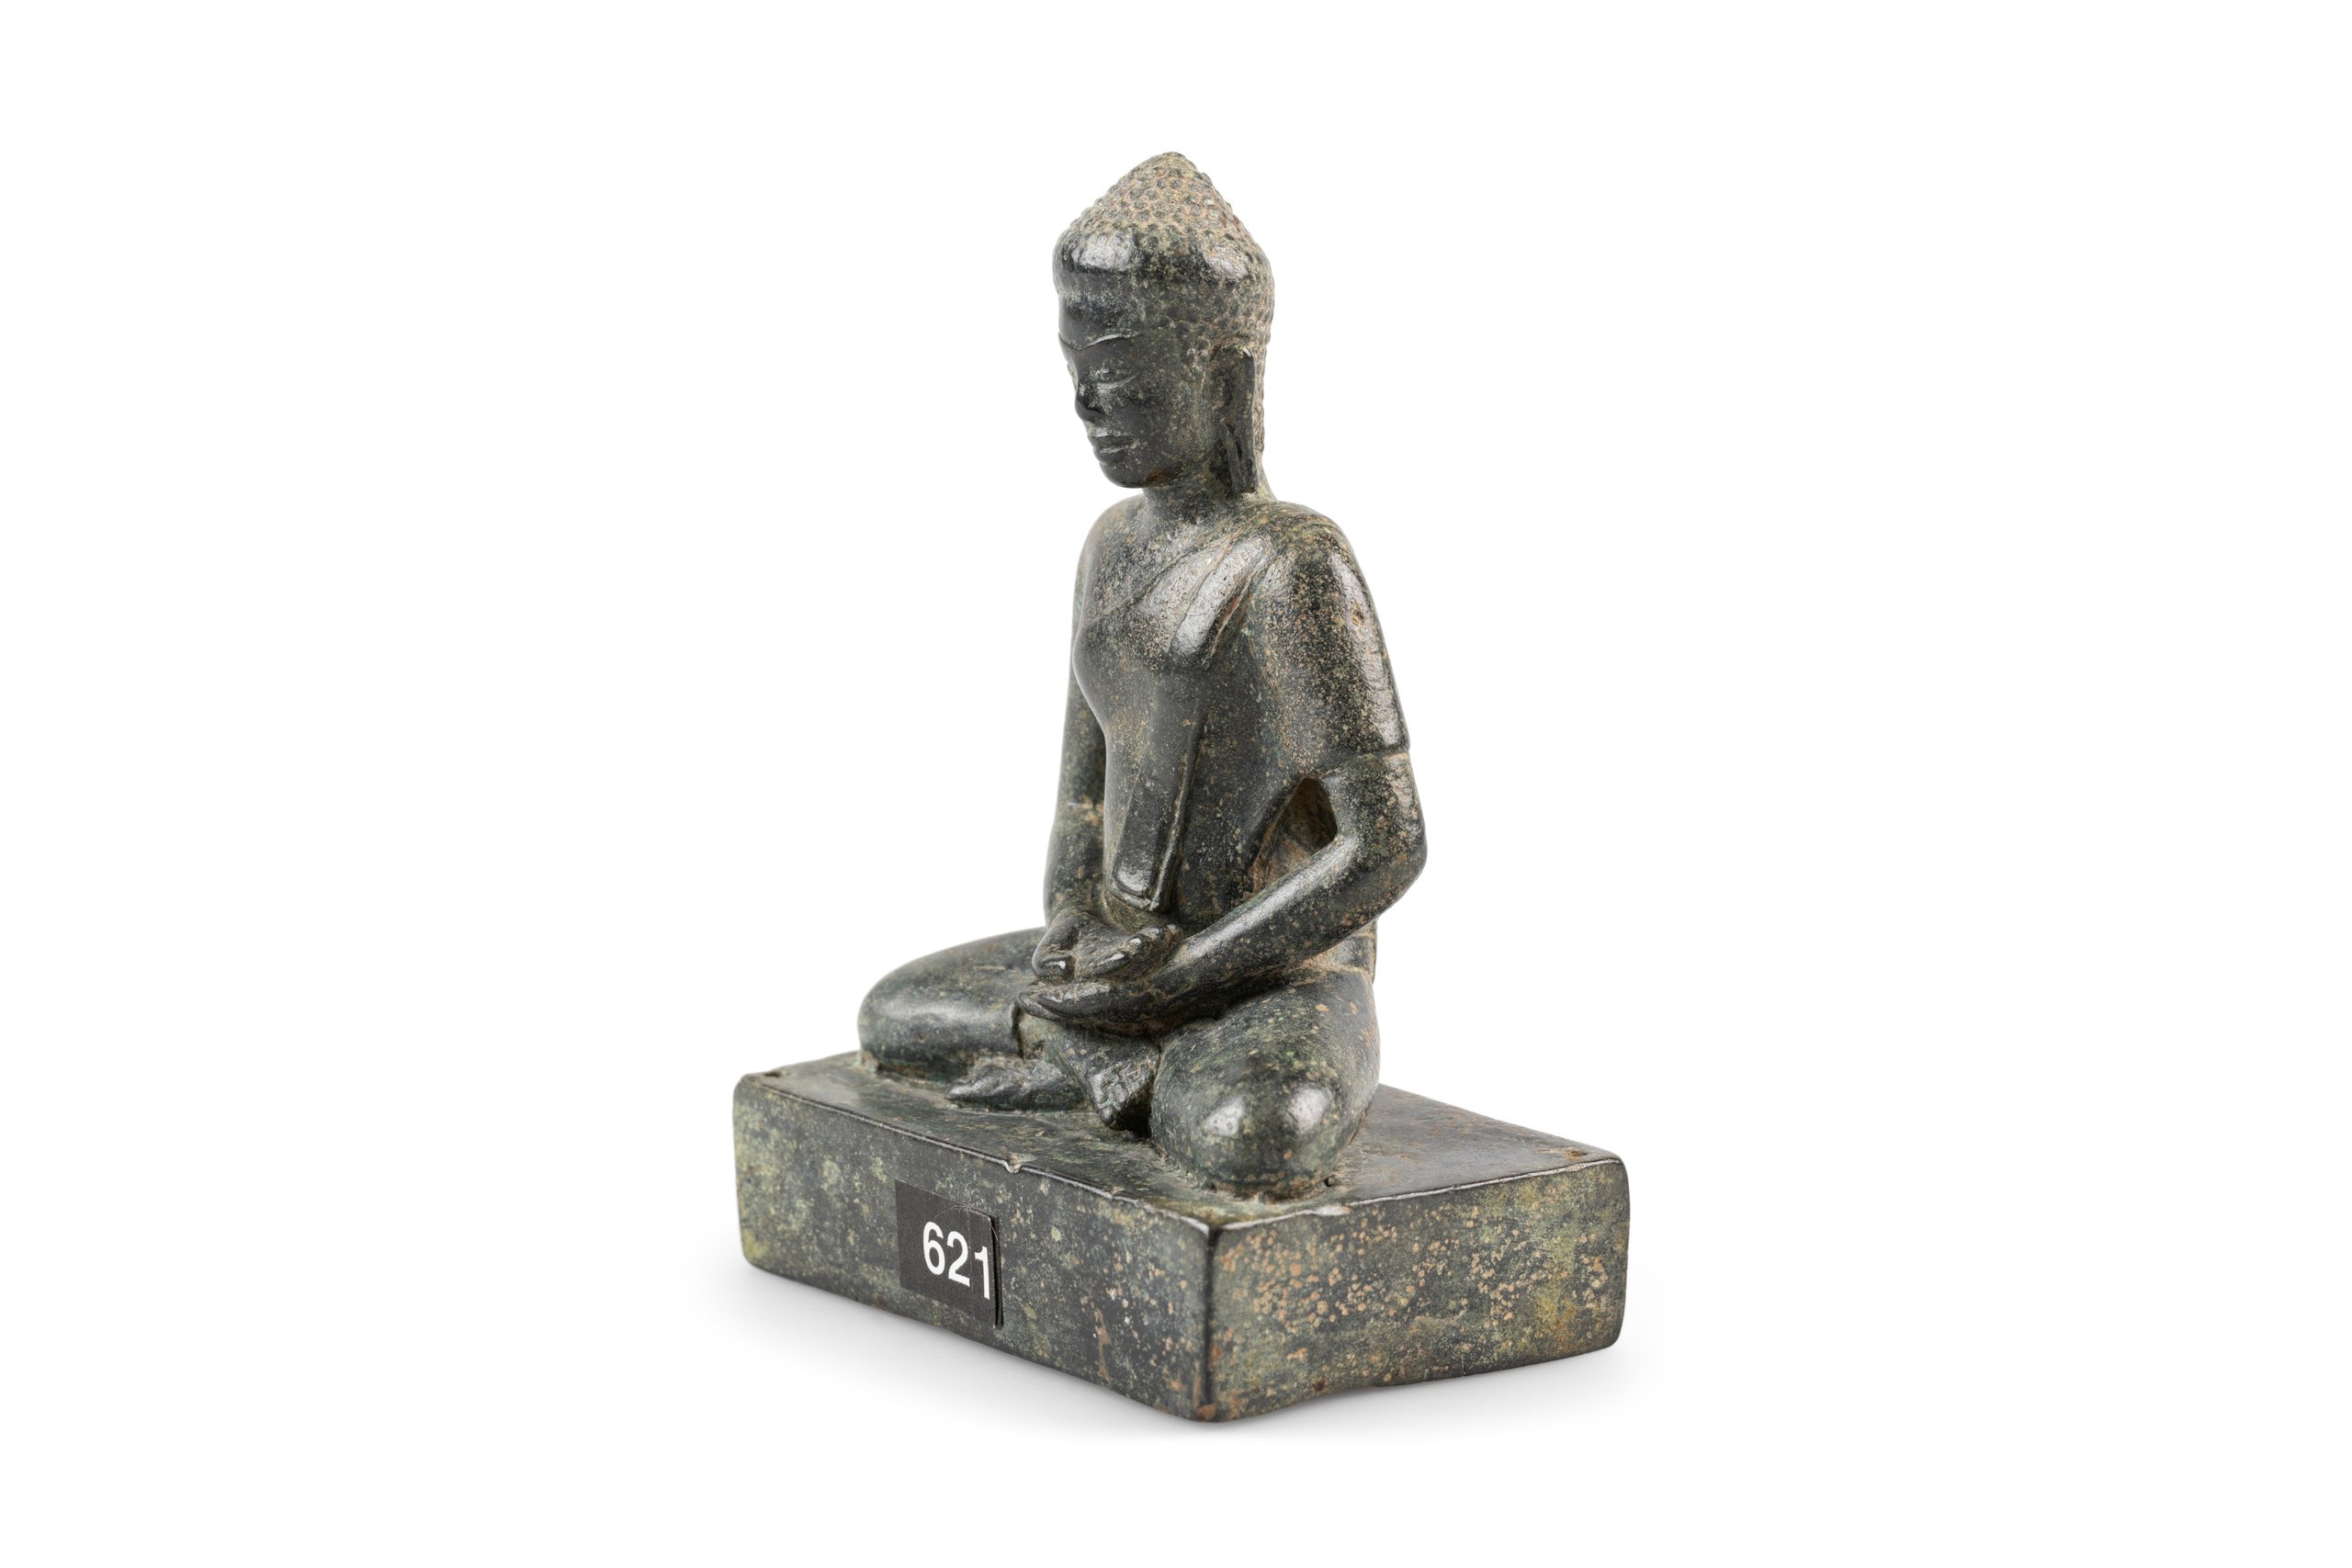 Seated Buddha figure from Cambodia